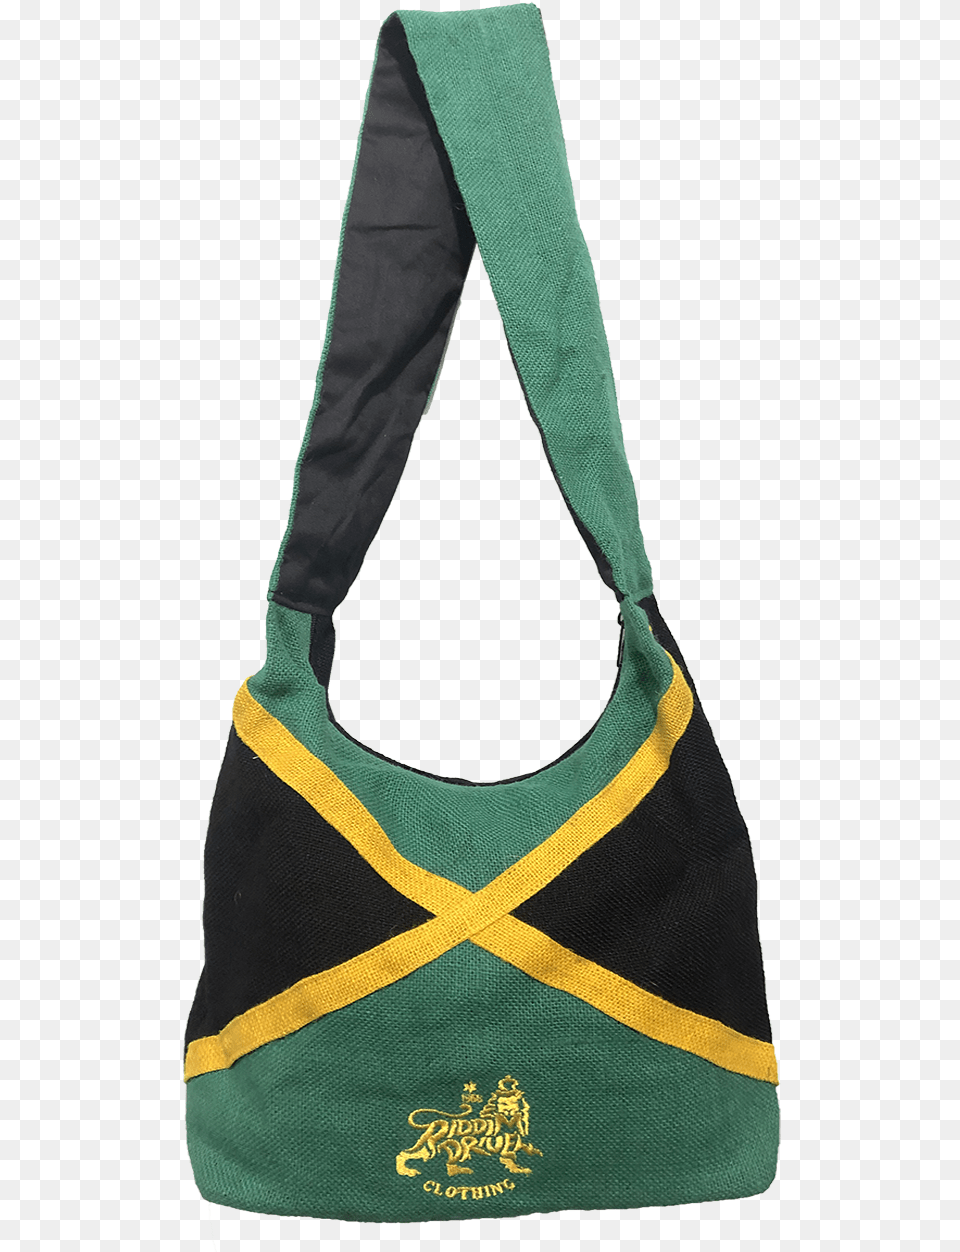 Jamaica Flag Bag Shoulder Shoulder Bag, Accessories, Handbag, Purse, Person Png Image